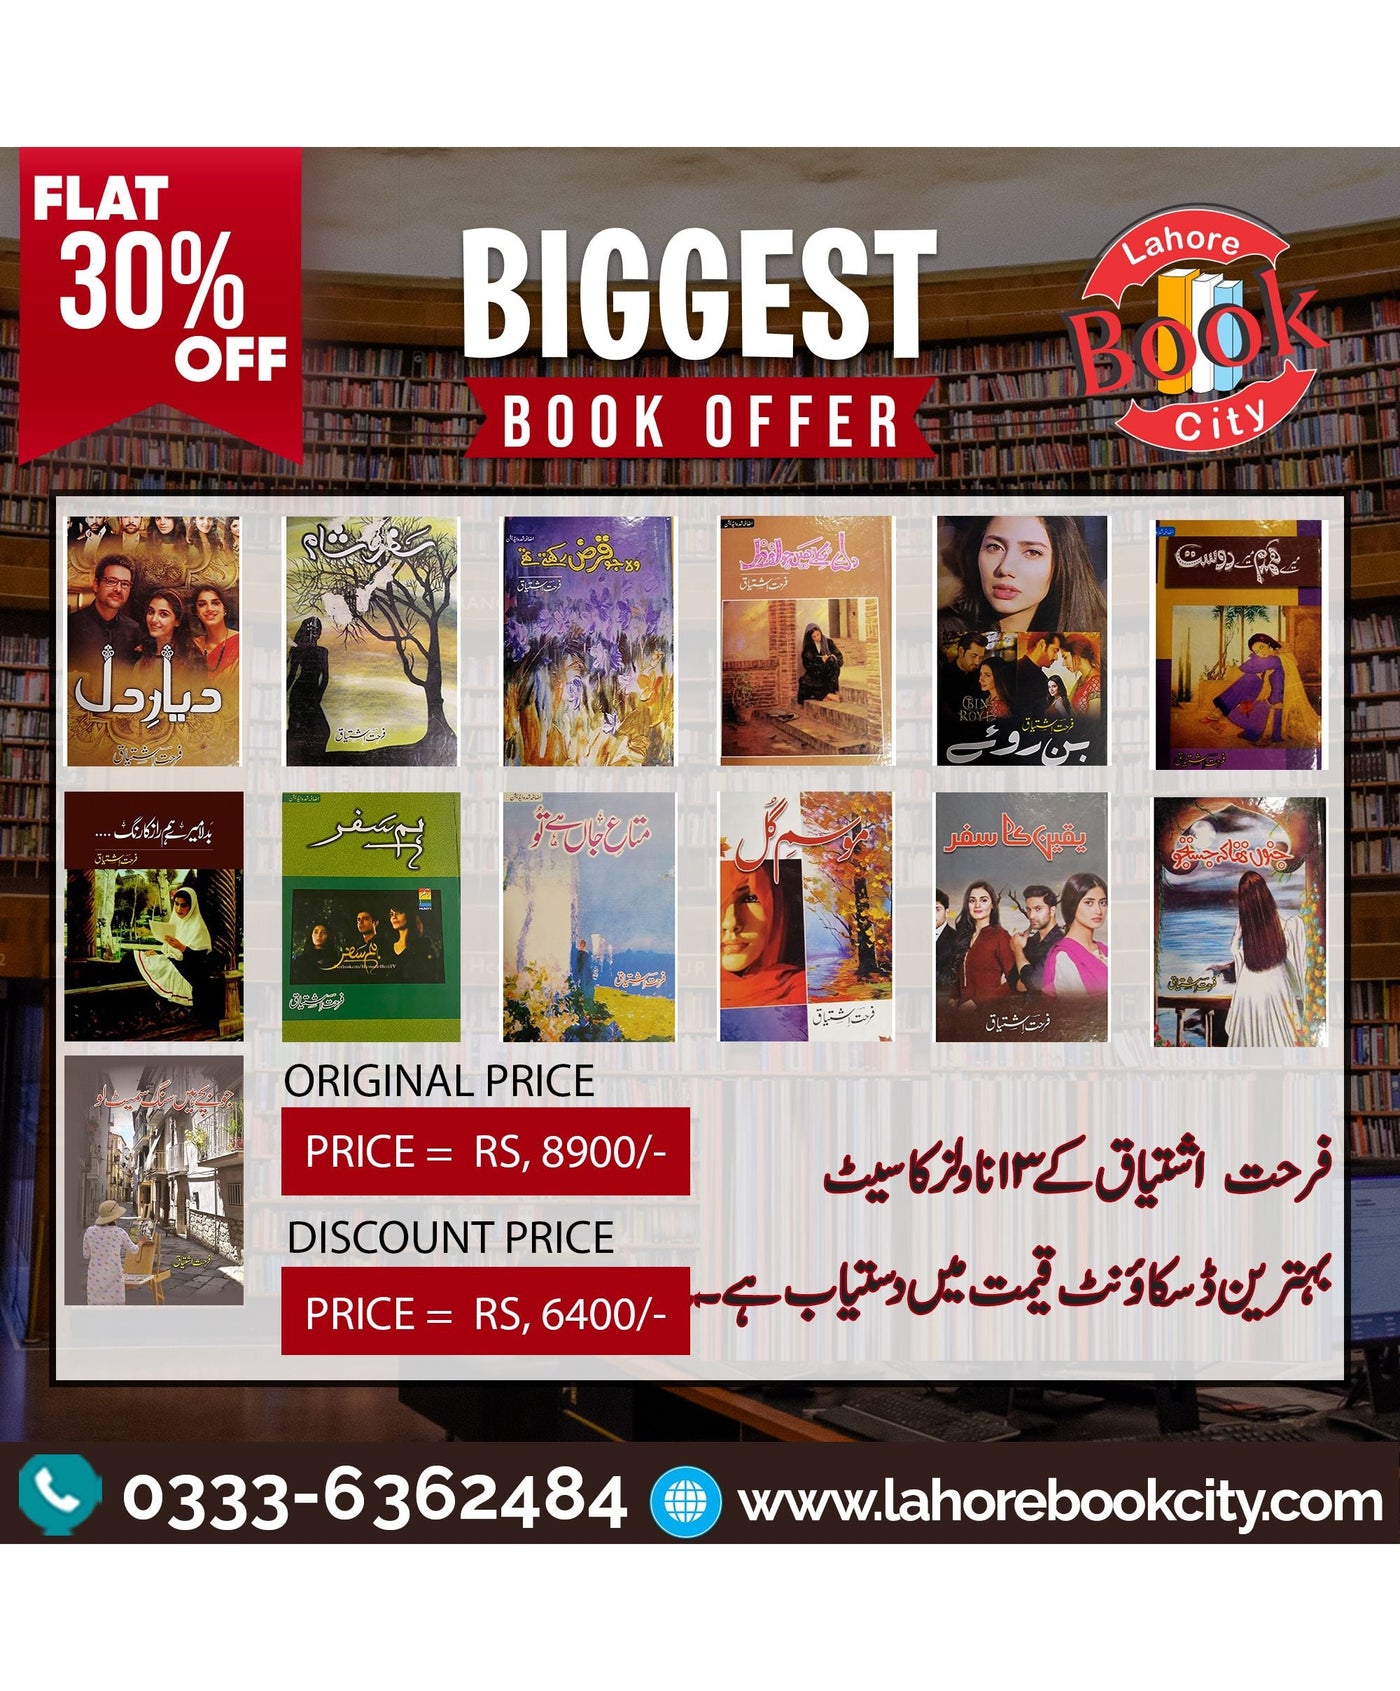 farhat ishtiaq 13 books deal set